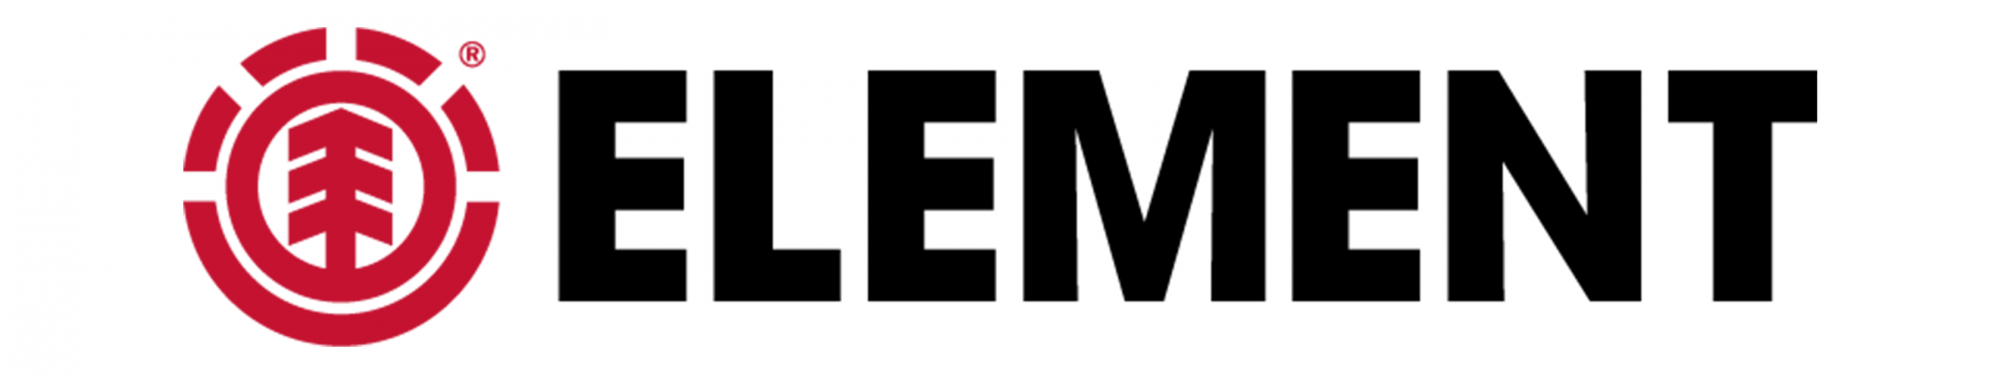 Element логотип. Element Skateboards logo. Элементы бренда. Exemet логотип. El elements